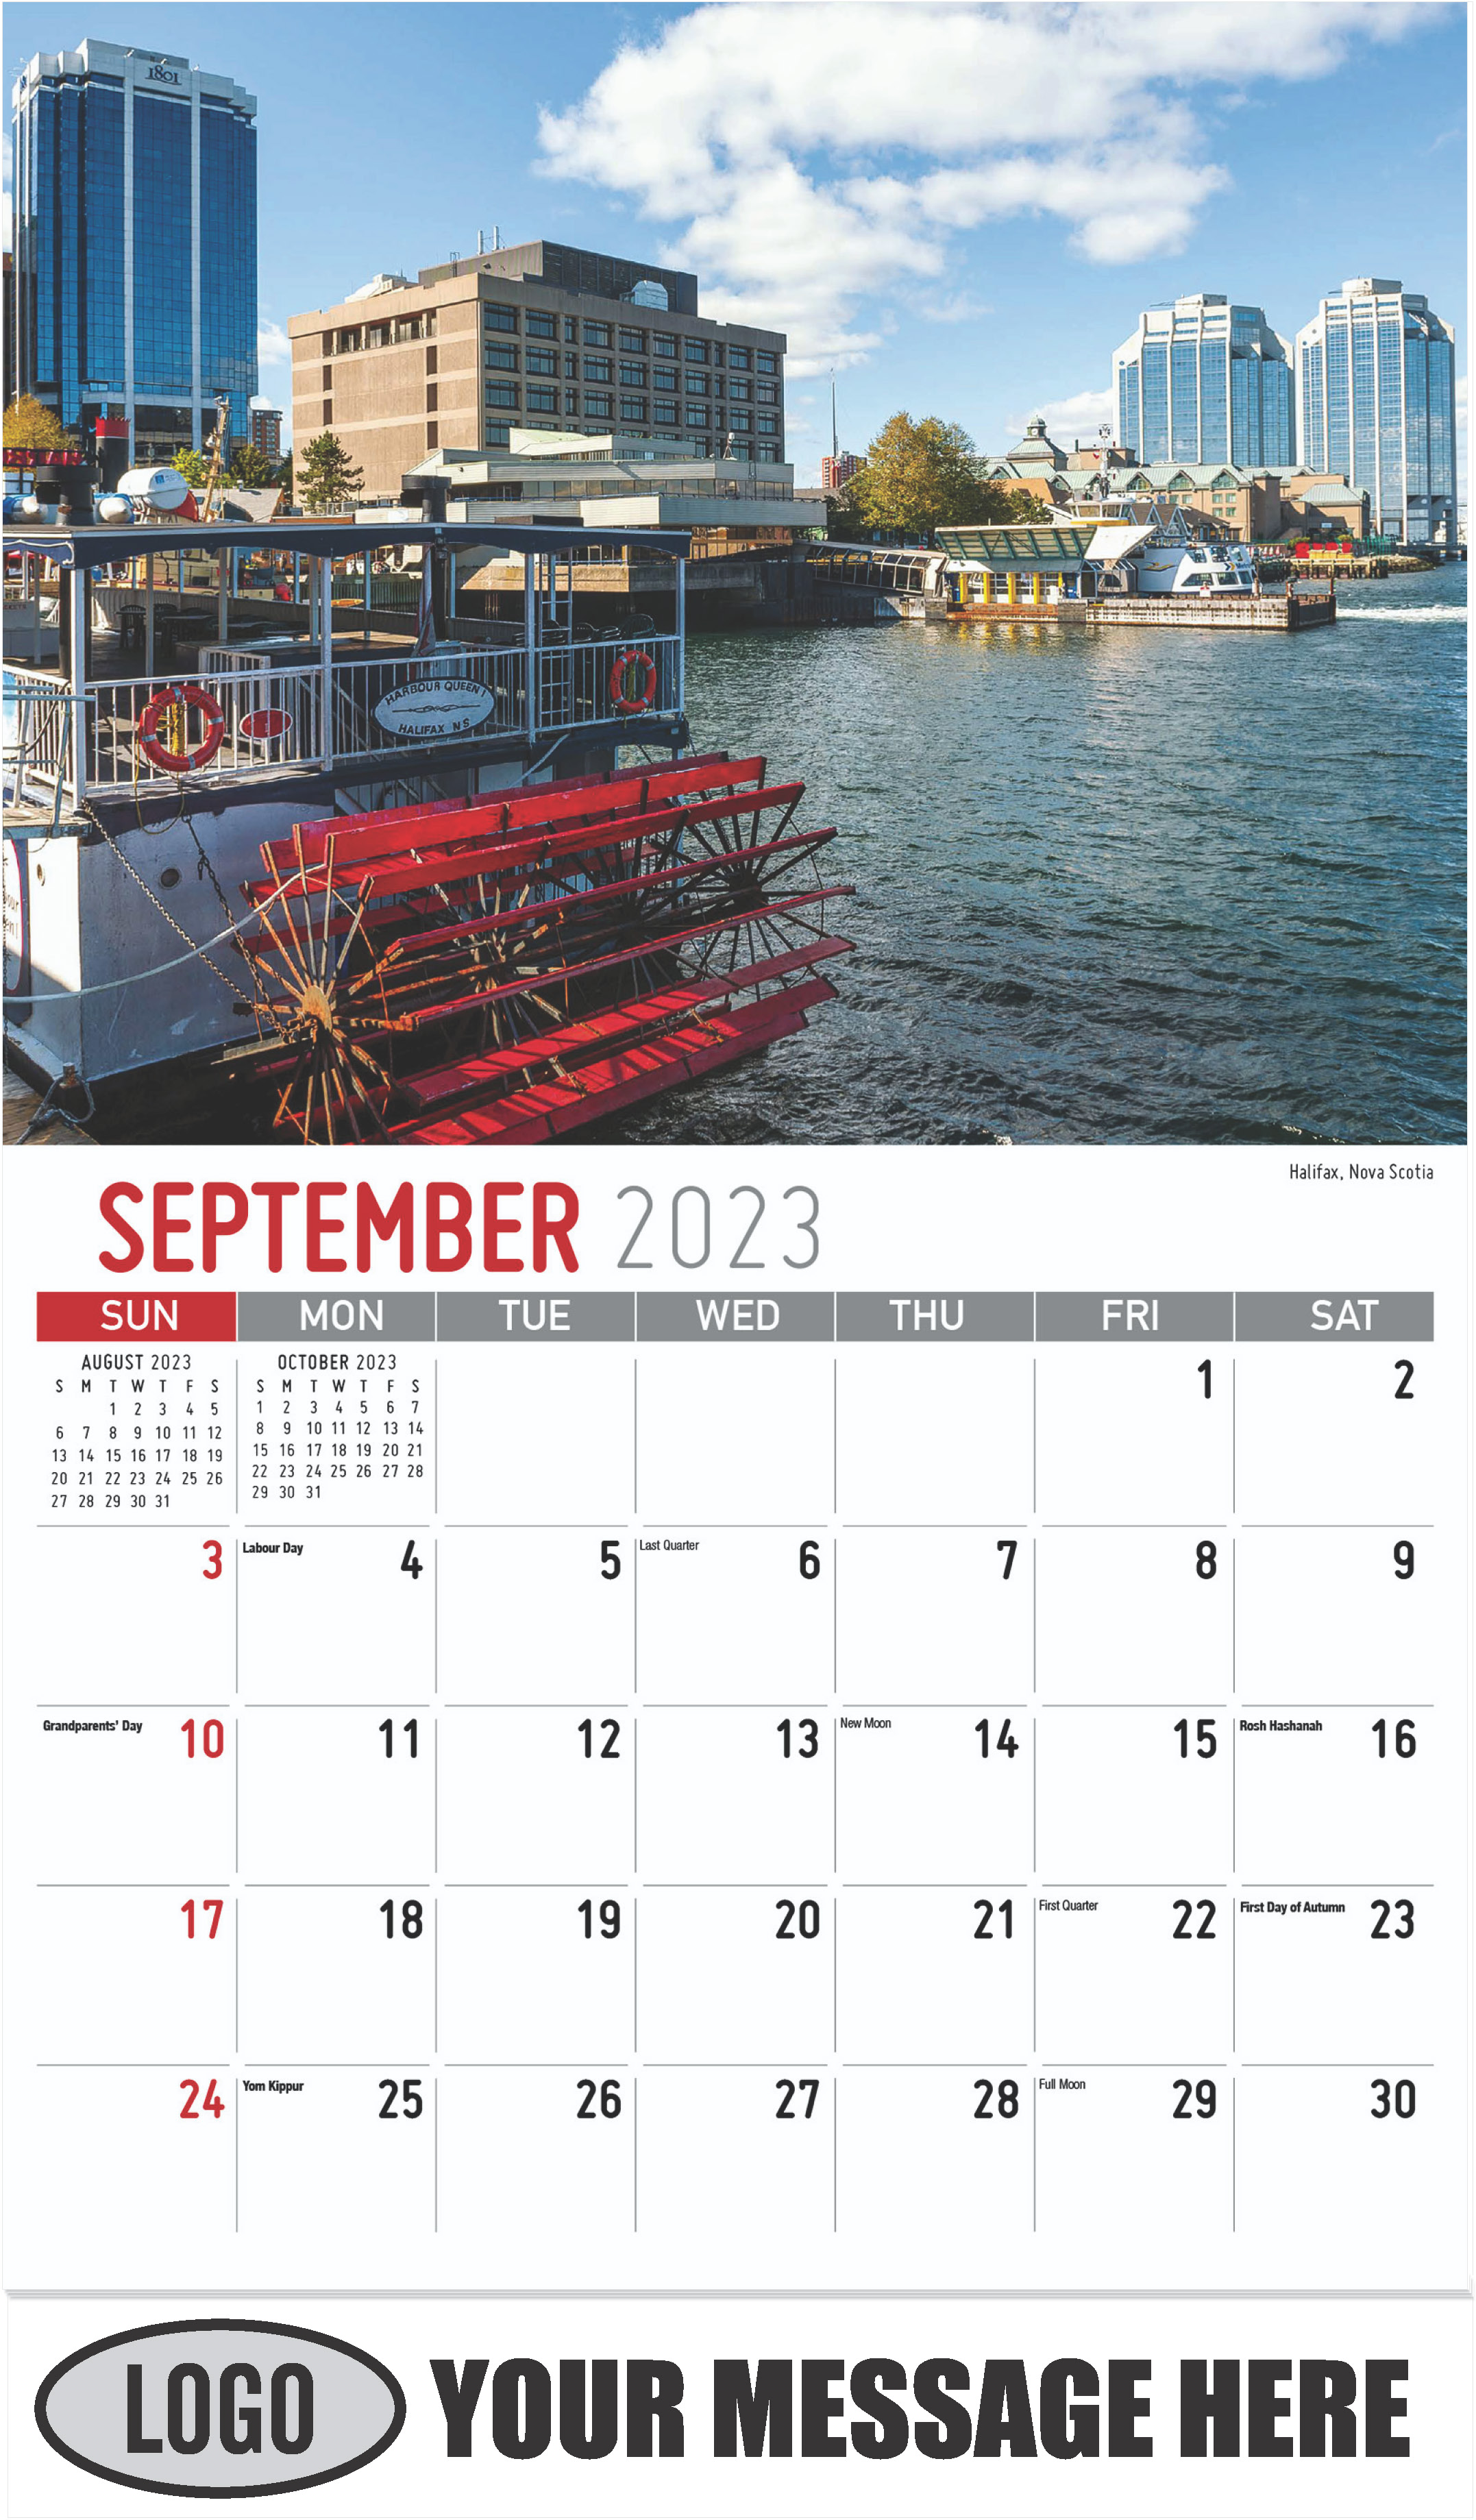 Halifax, Nova Scotia - September - Atlantic Canada 2023 Promotional Calendar